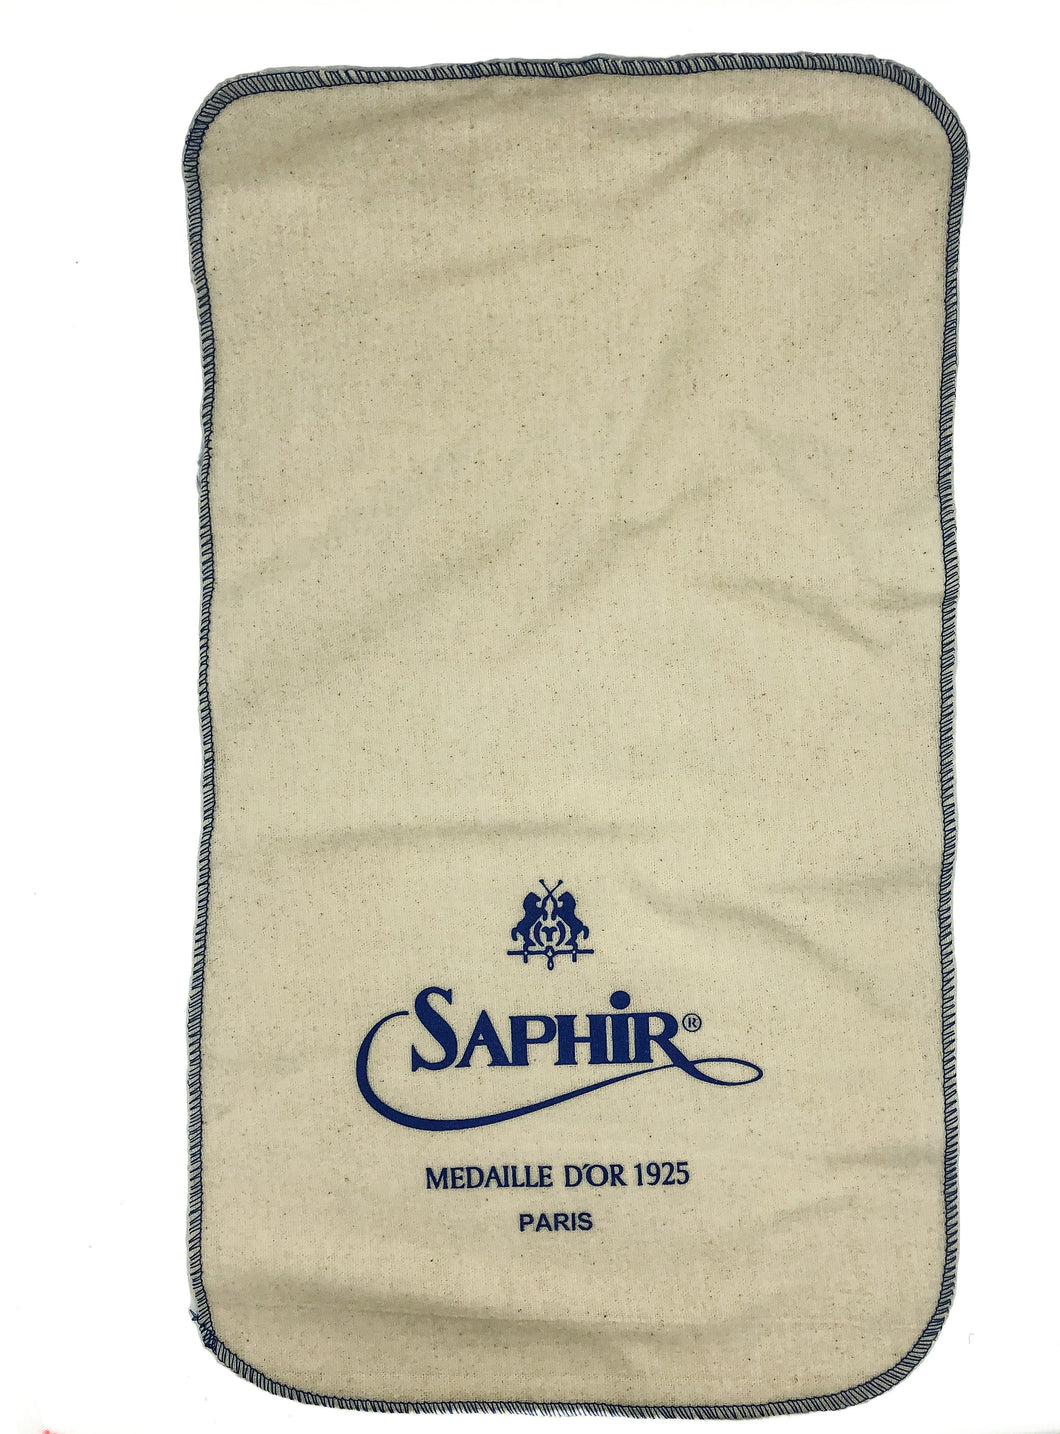 Saphir Medialle d’or Polishing Cloth, Large